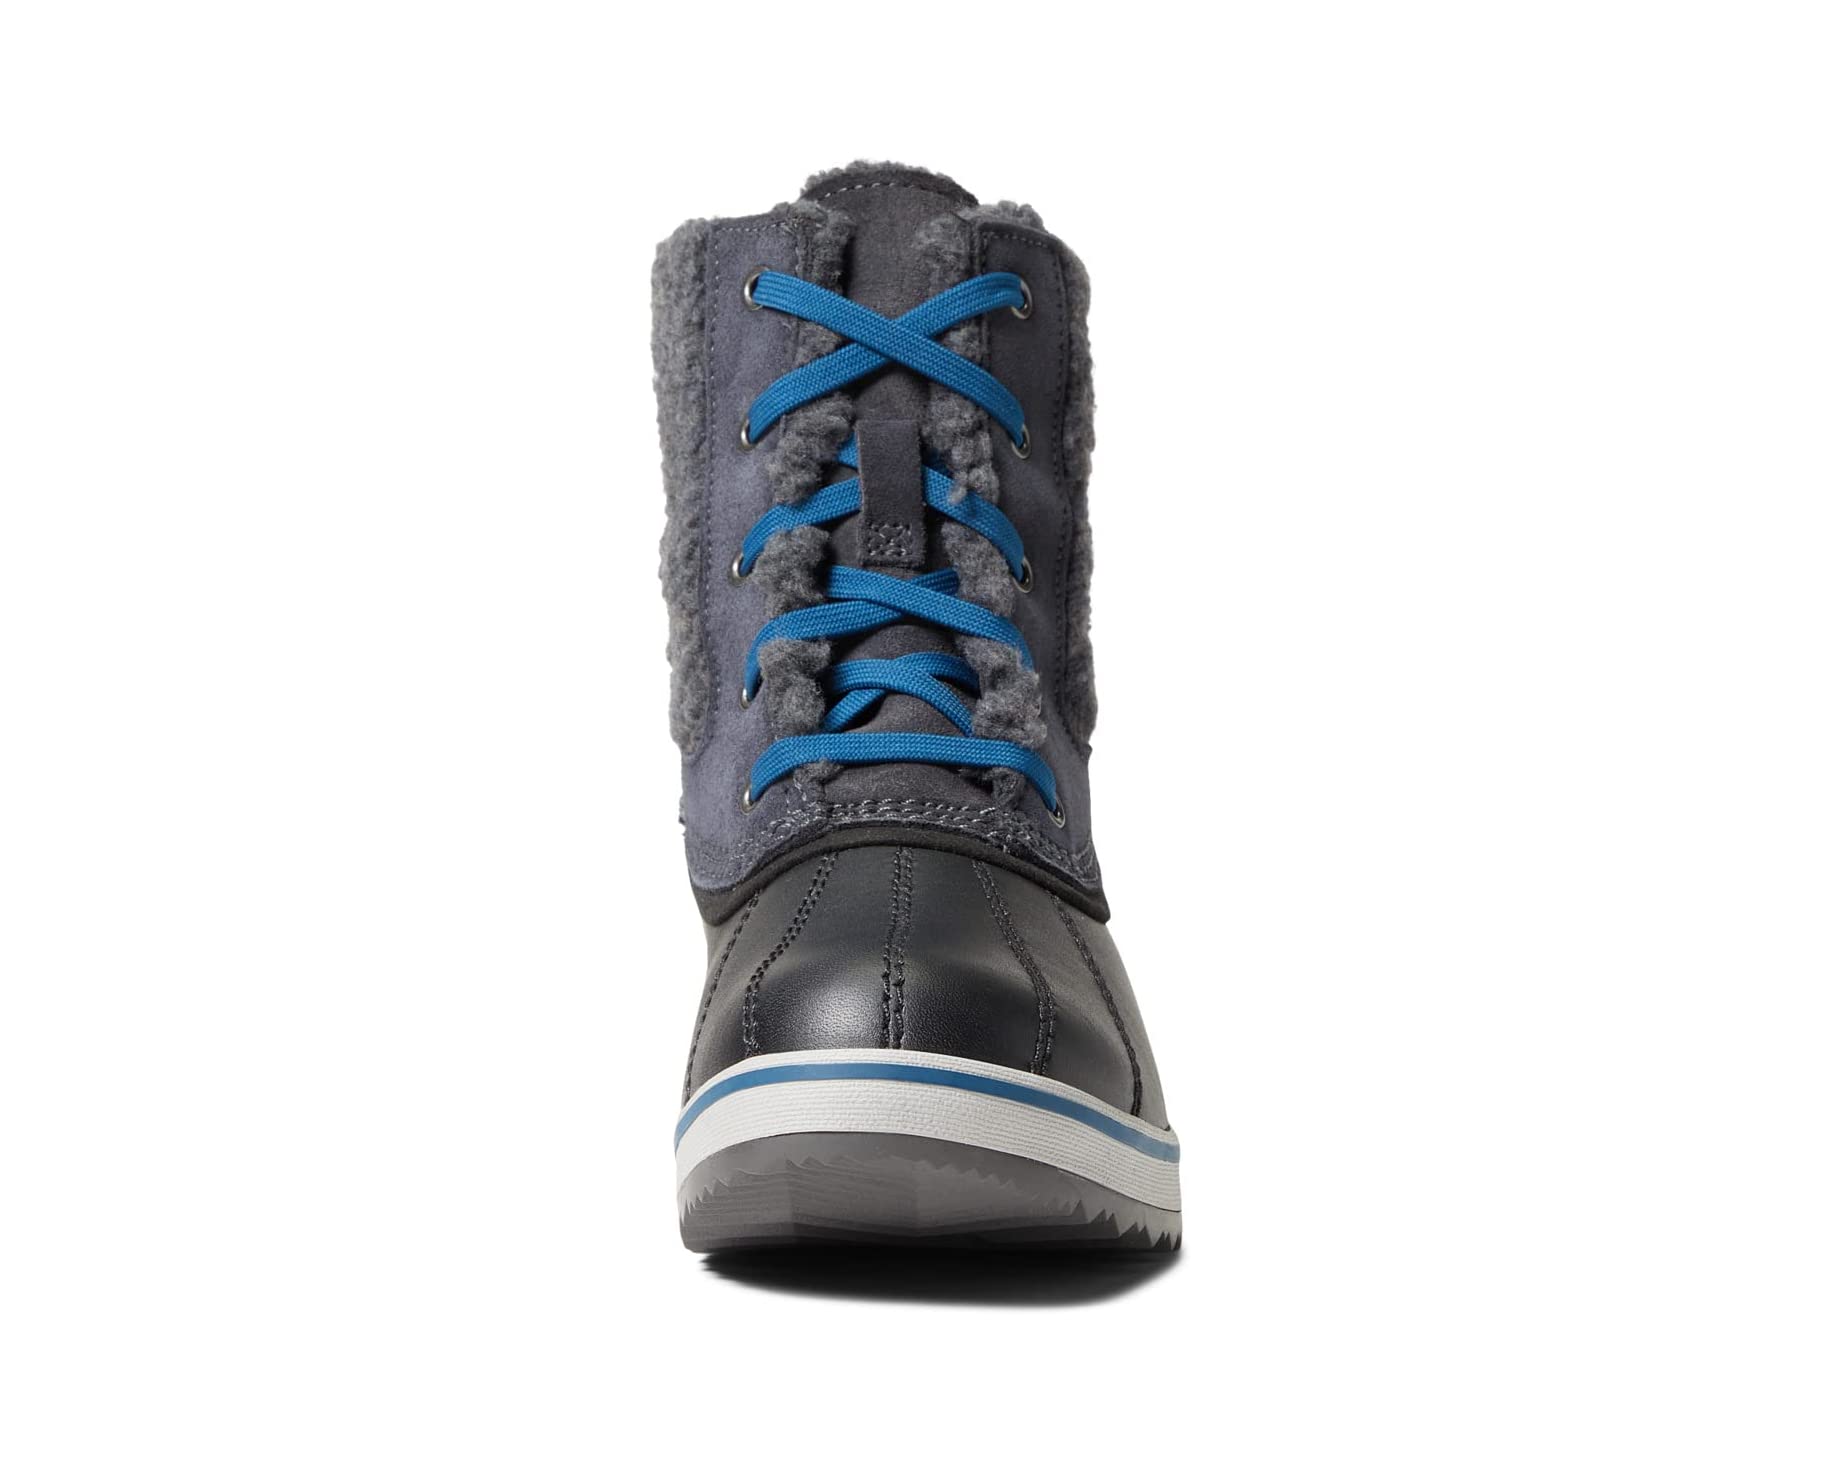 Ботинки Rangeley Pac Boot Ankle Waterproof Insulated L.L.Bean, серый